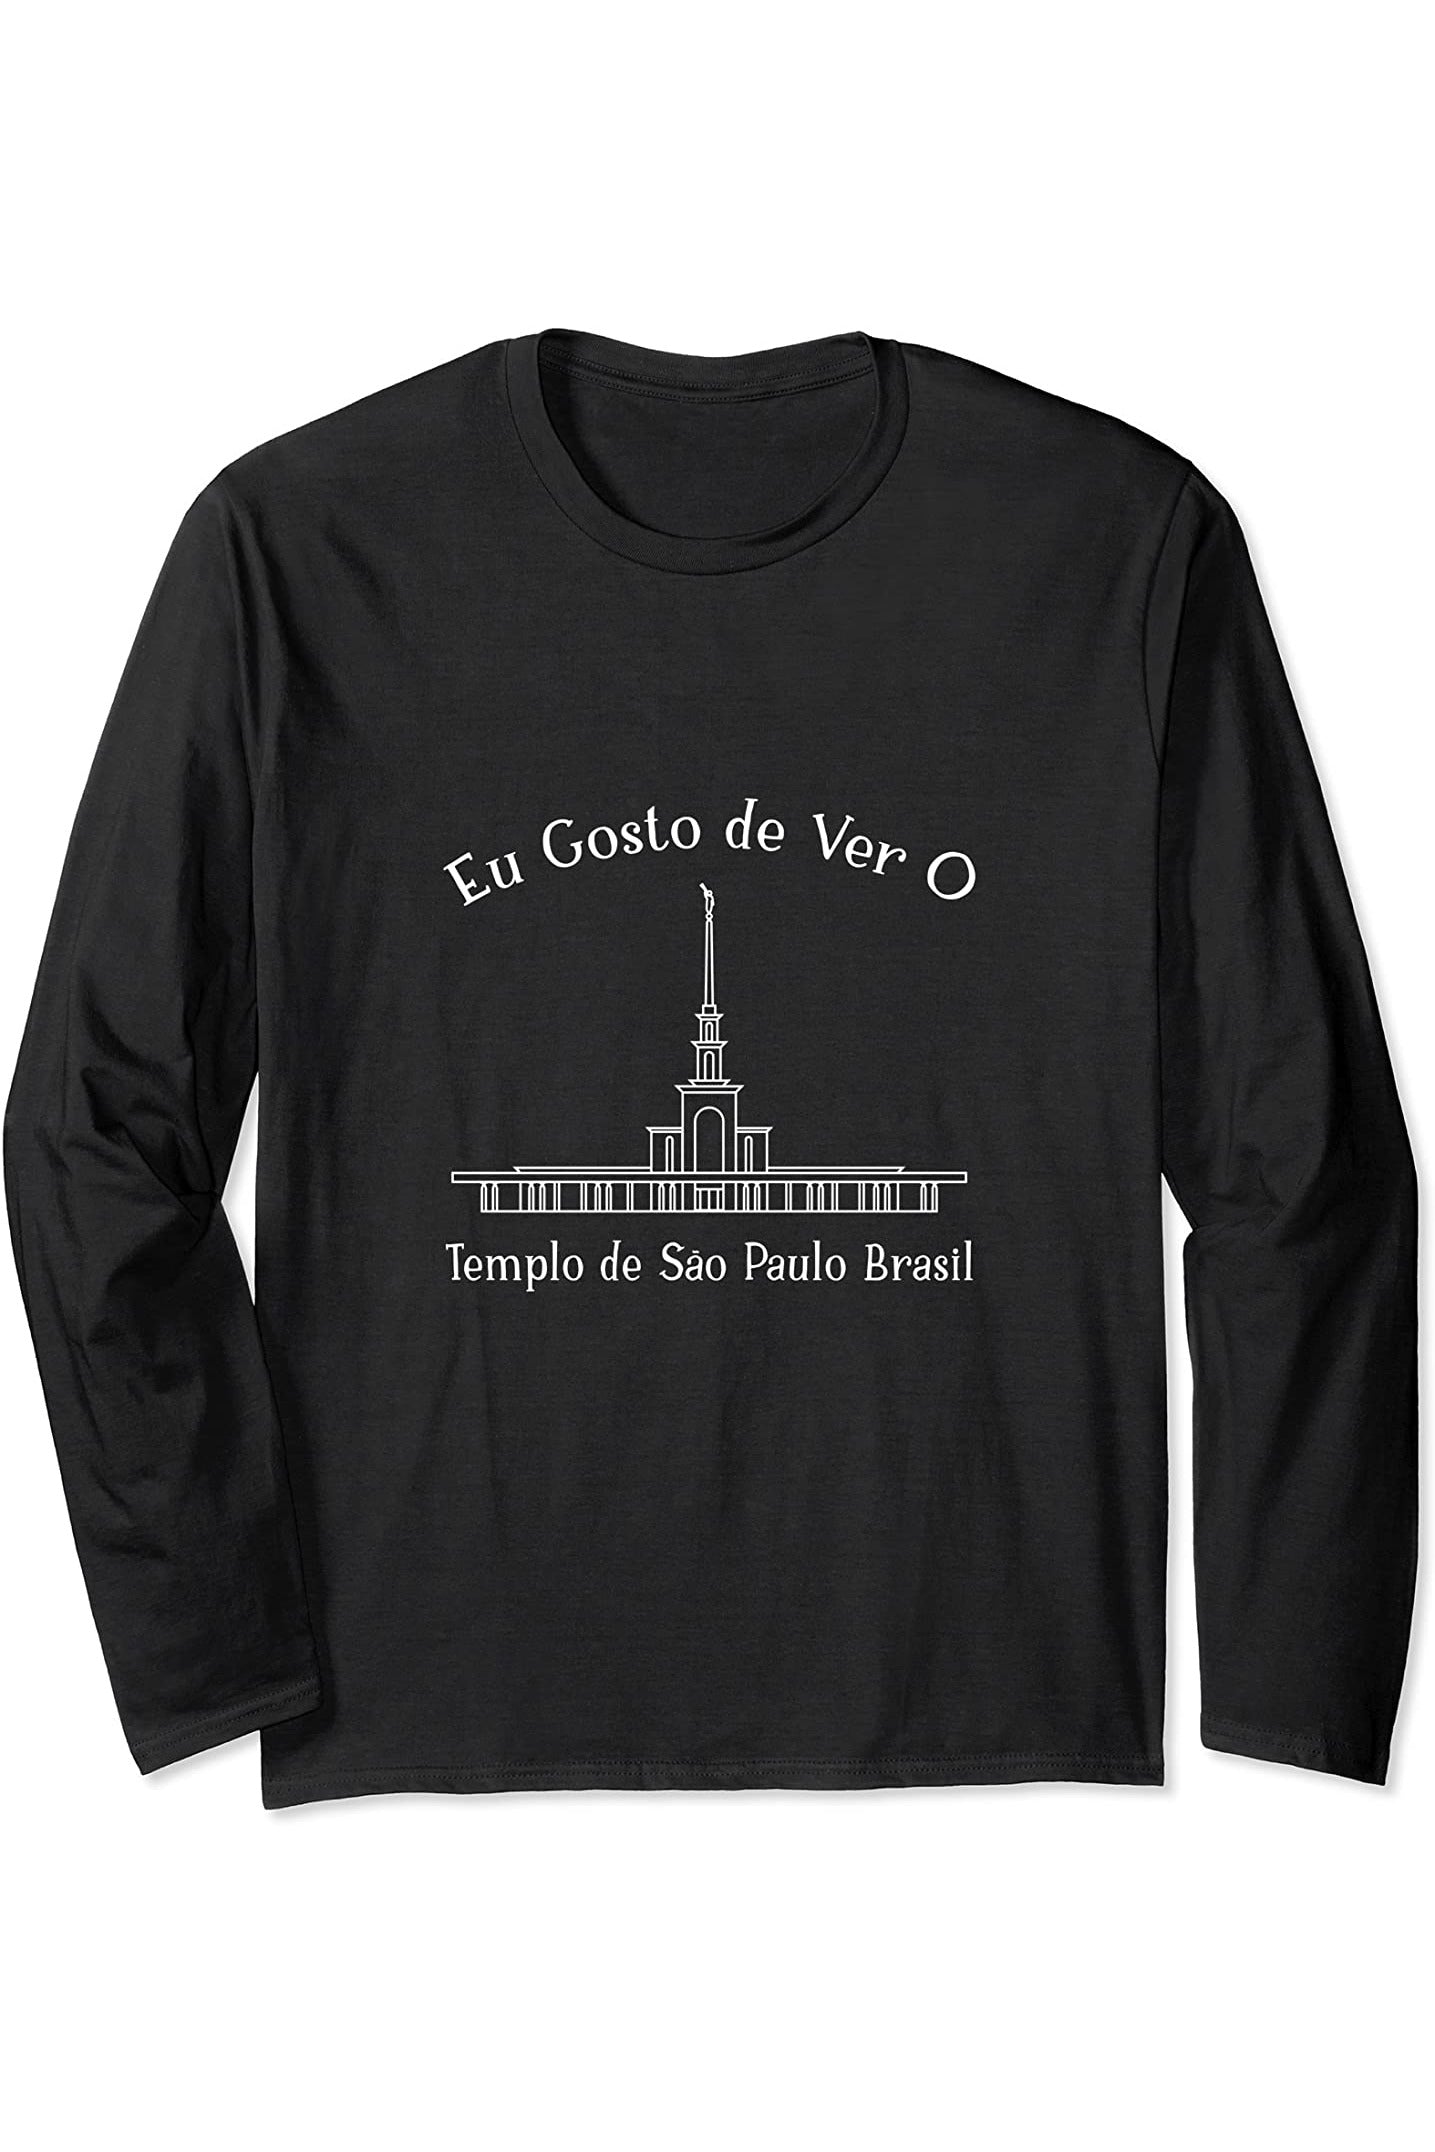 Sao Paulo Brazil Temple Long Sleeve T-Shirt - Happy Style (Portuguese) US